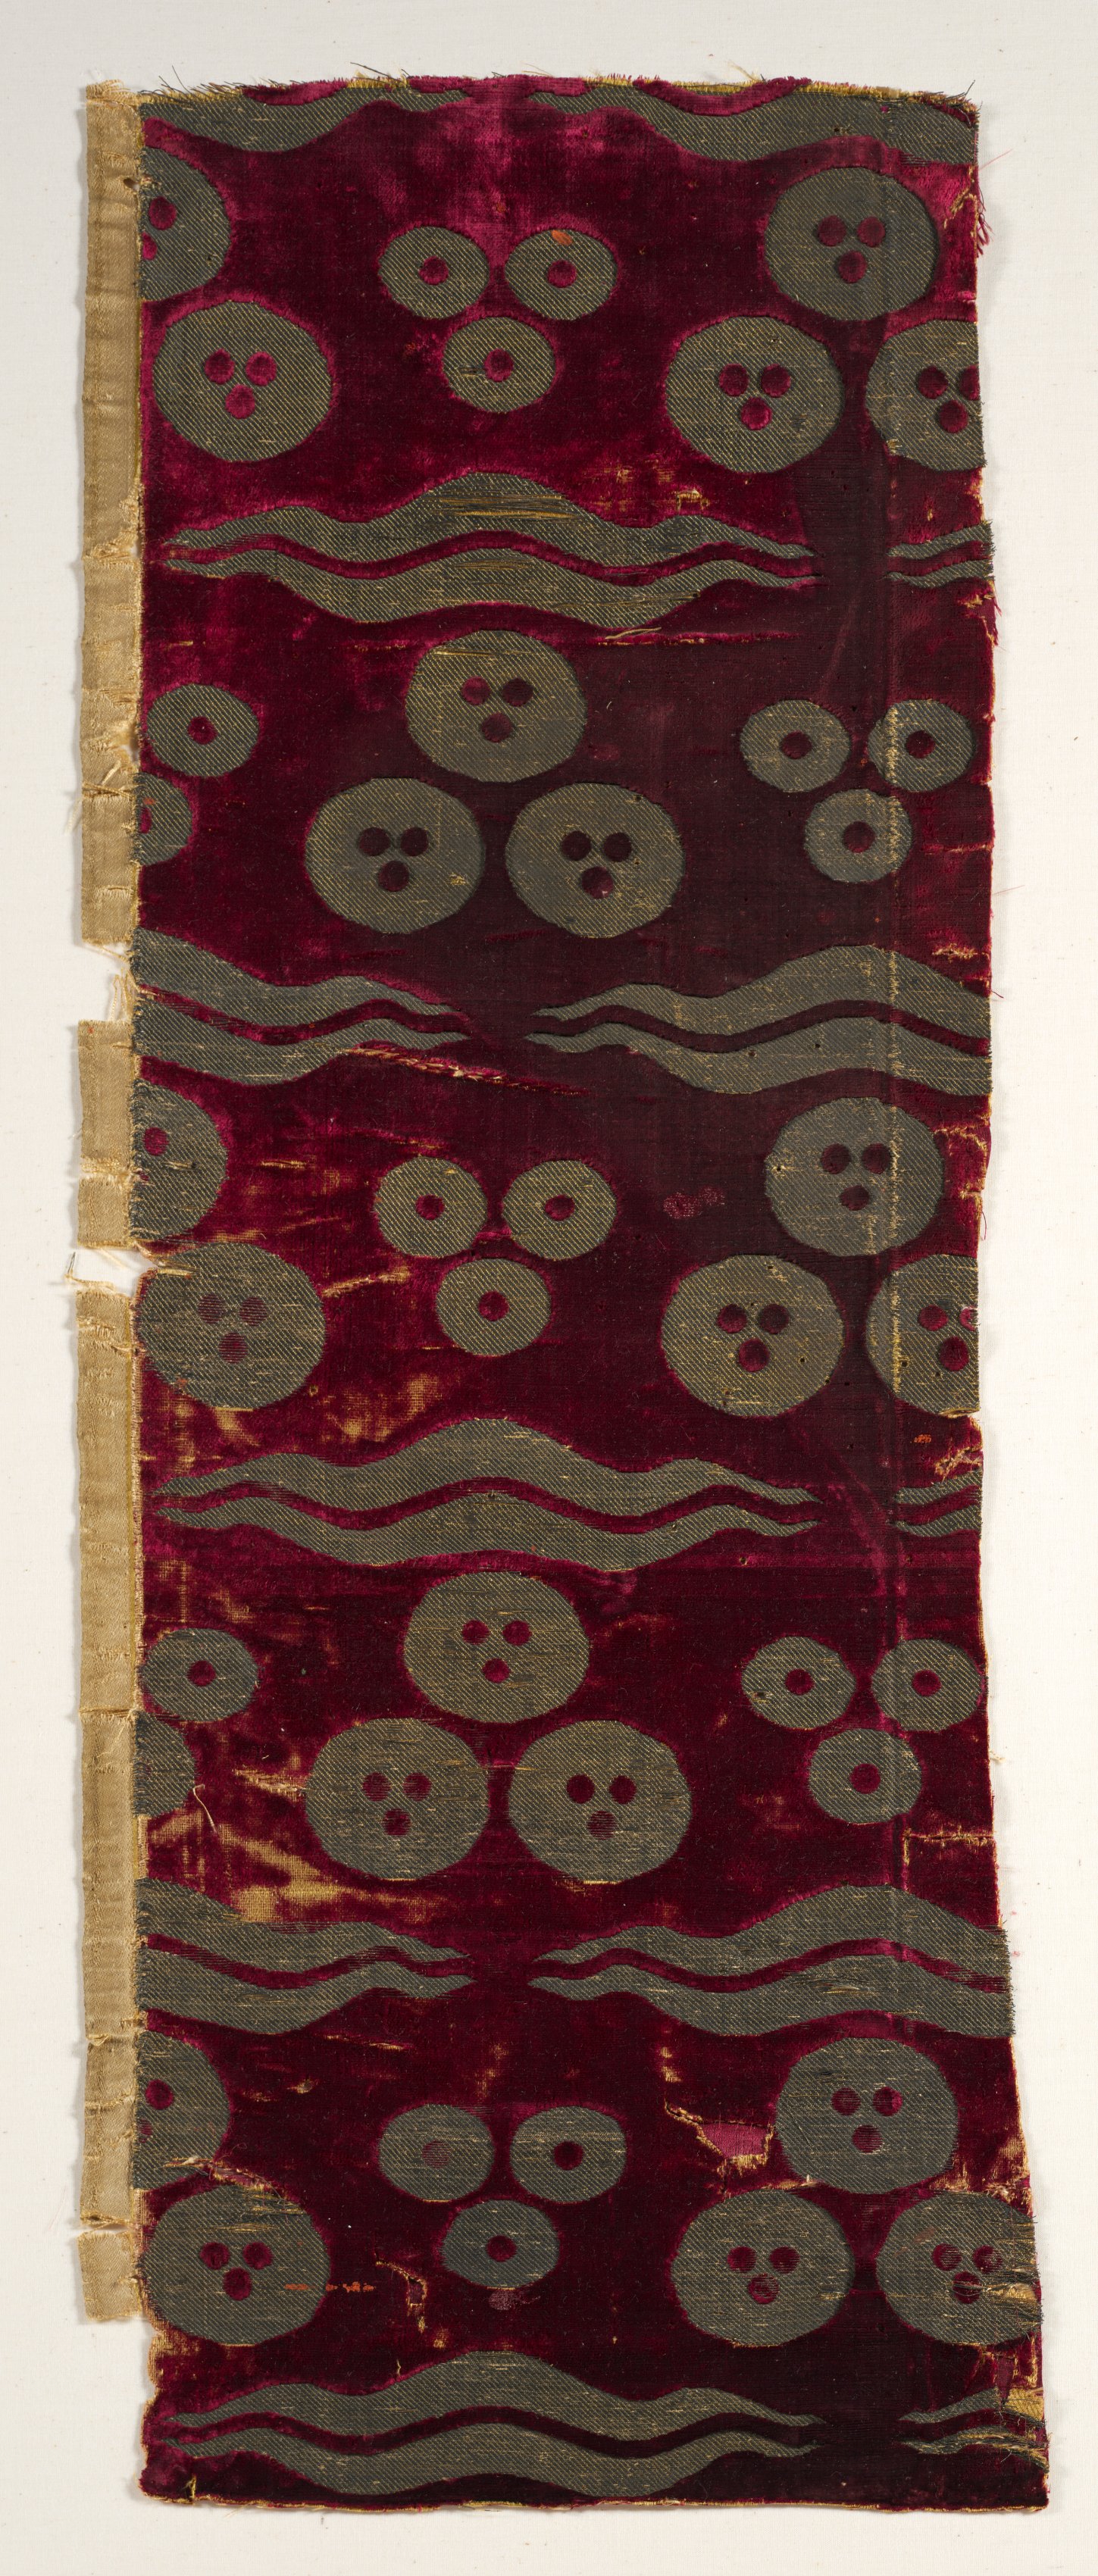 Brocaded velvet with chintamani design